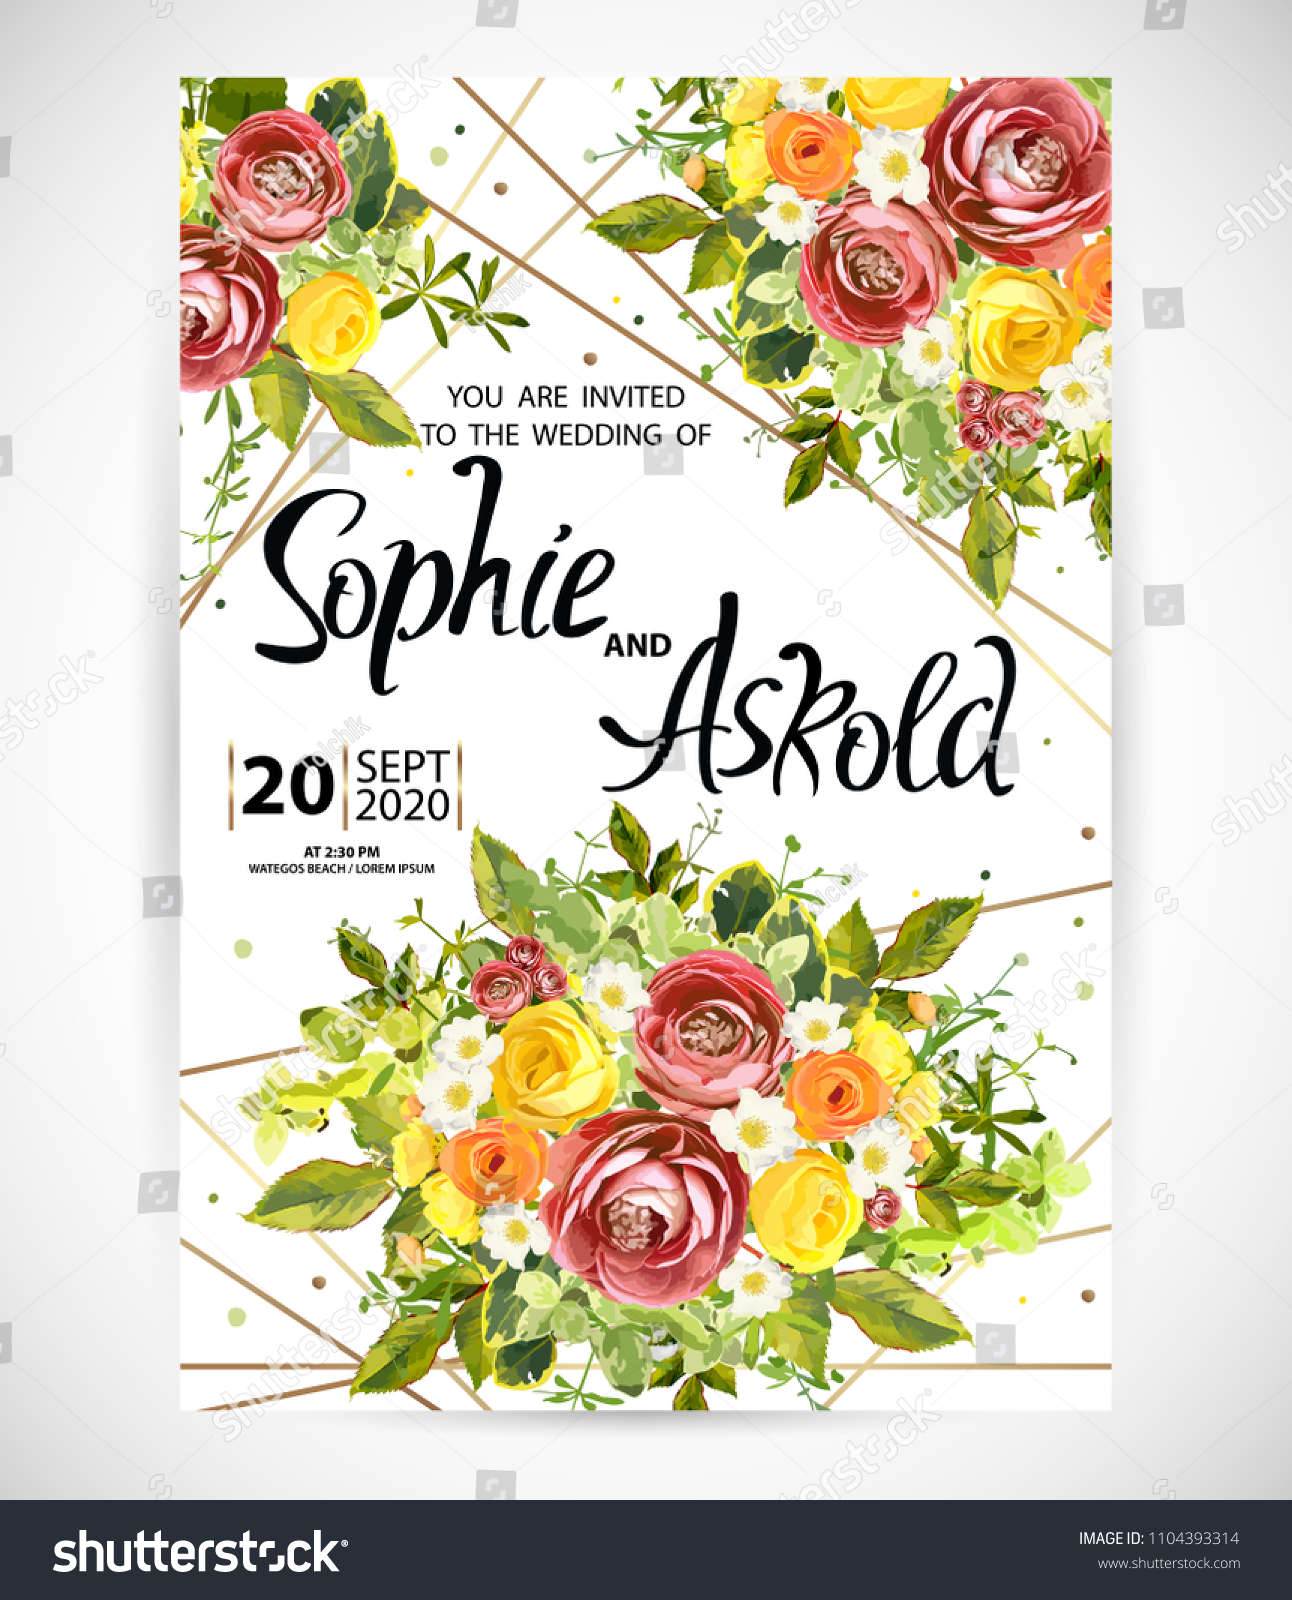 Wedding Floral Template Invite Garden Flower Stock Vector Royalty Free 1104393314